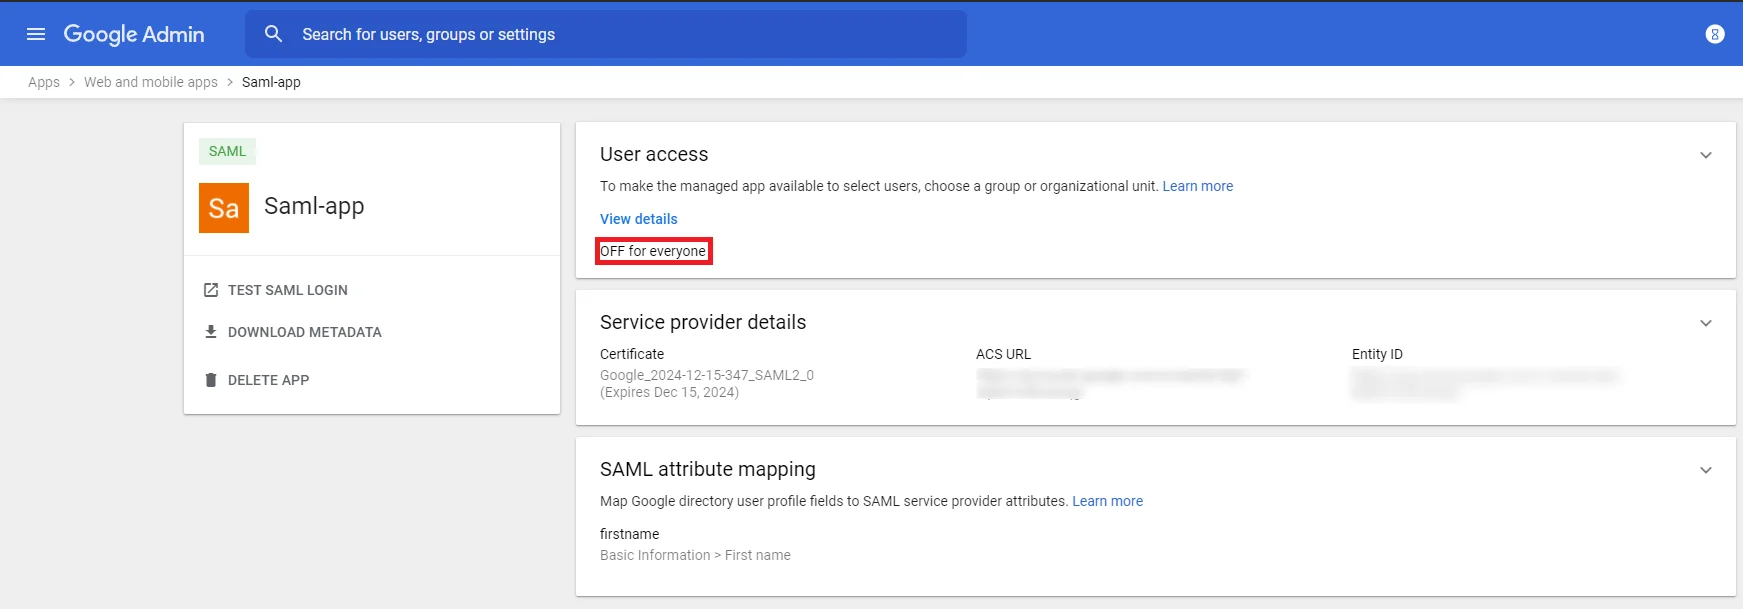 DNN SAML Single Sign-On (SSO) using Google Apps as IDP - Turn-On go to SAML Apps